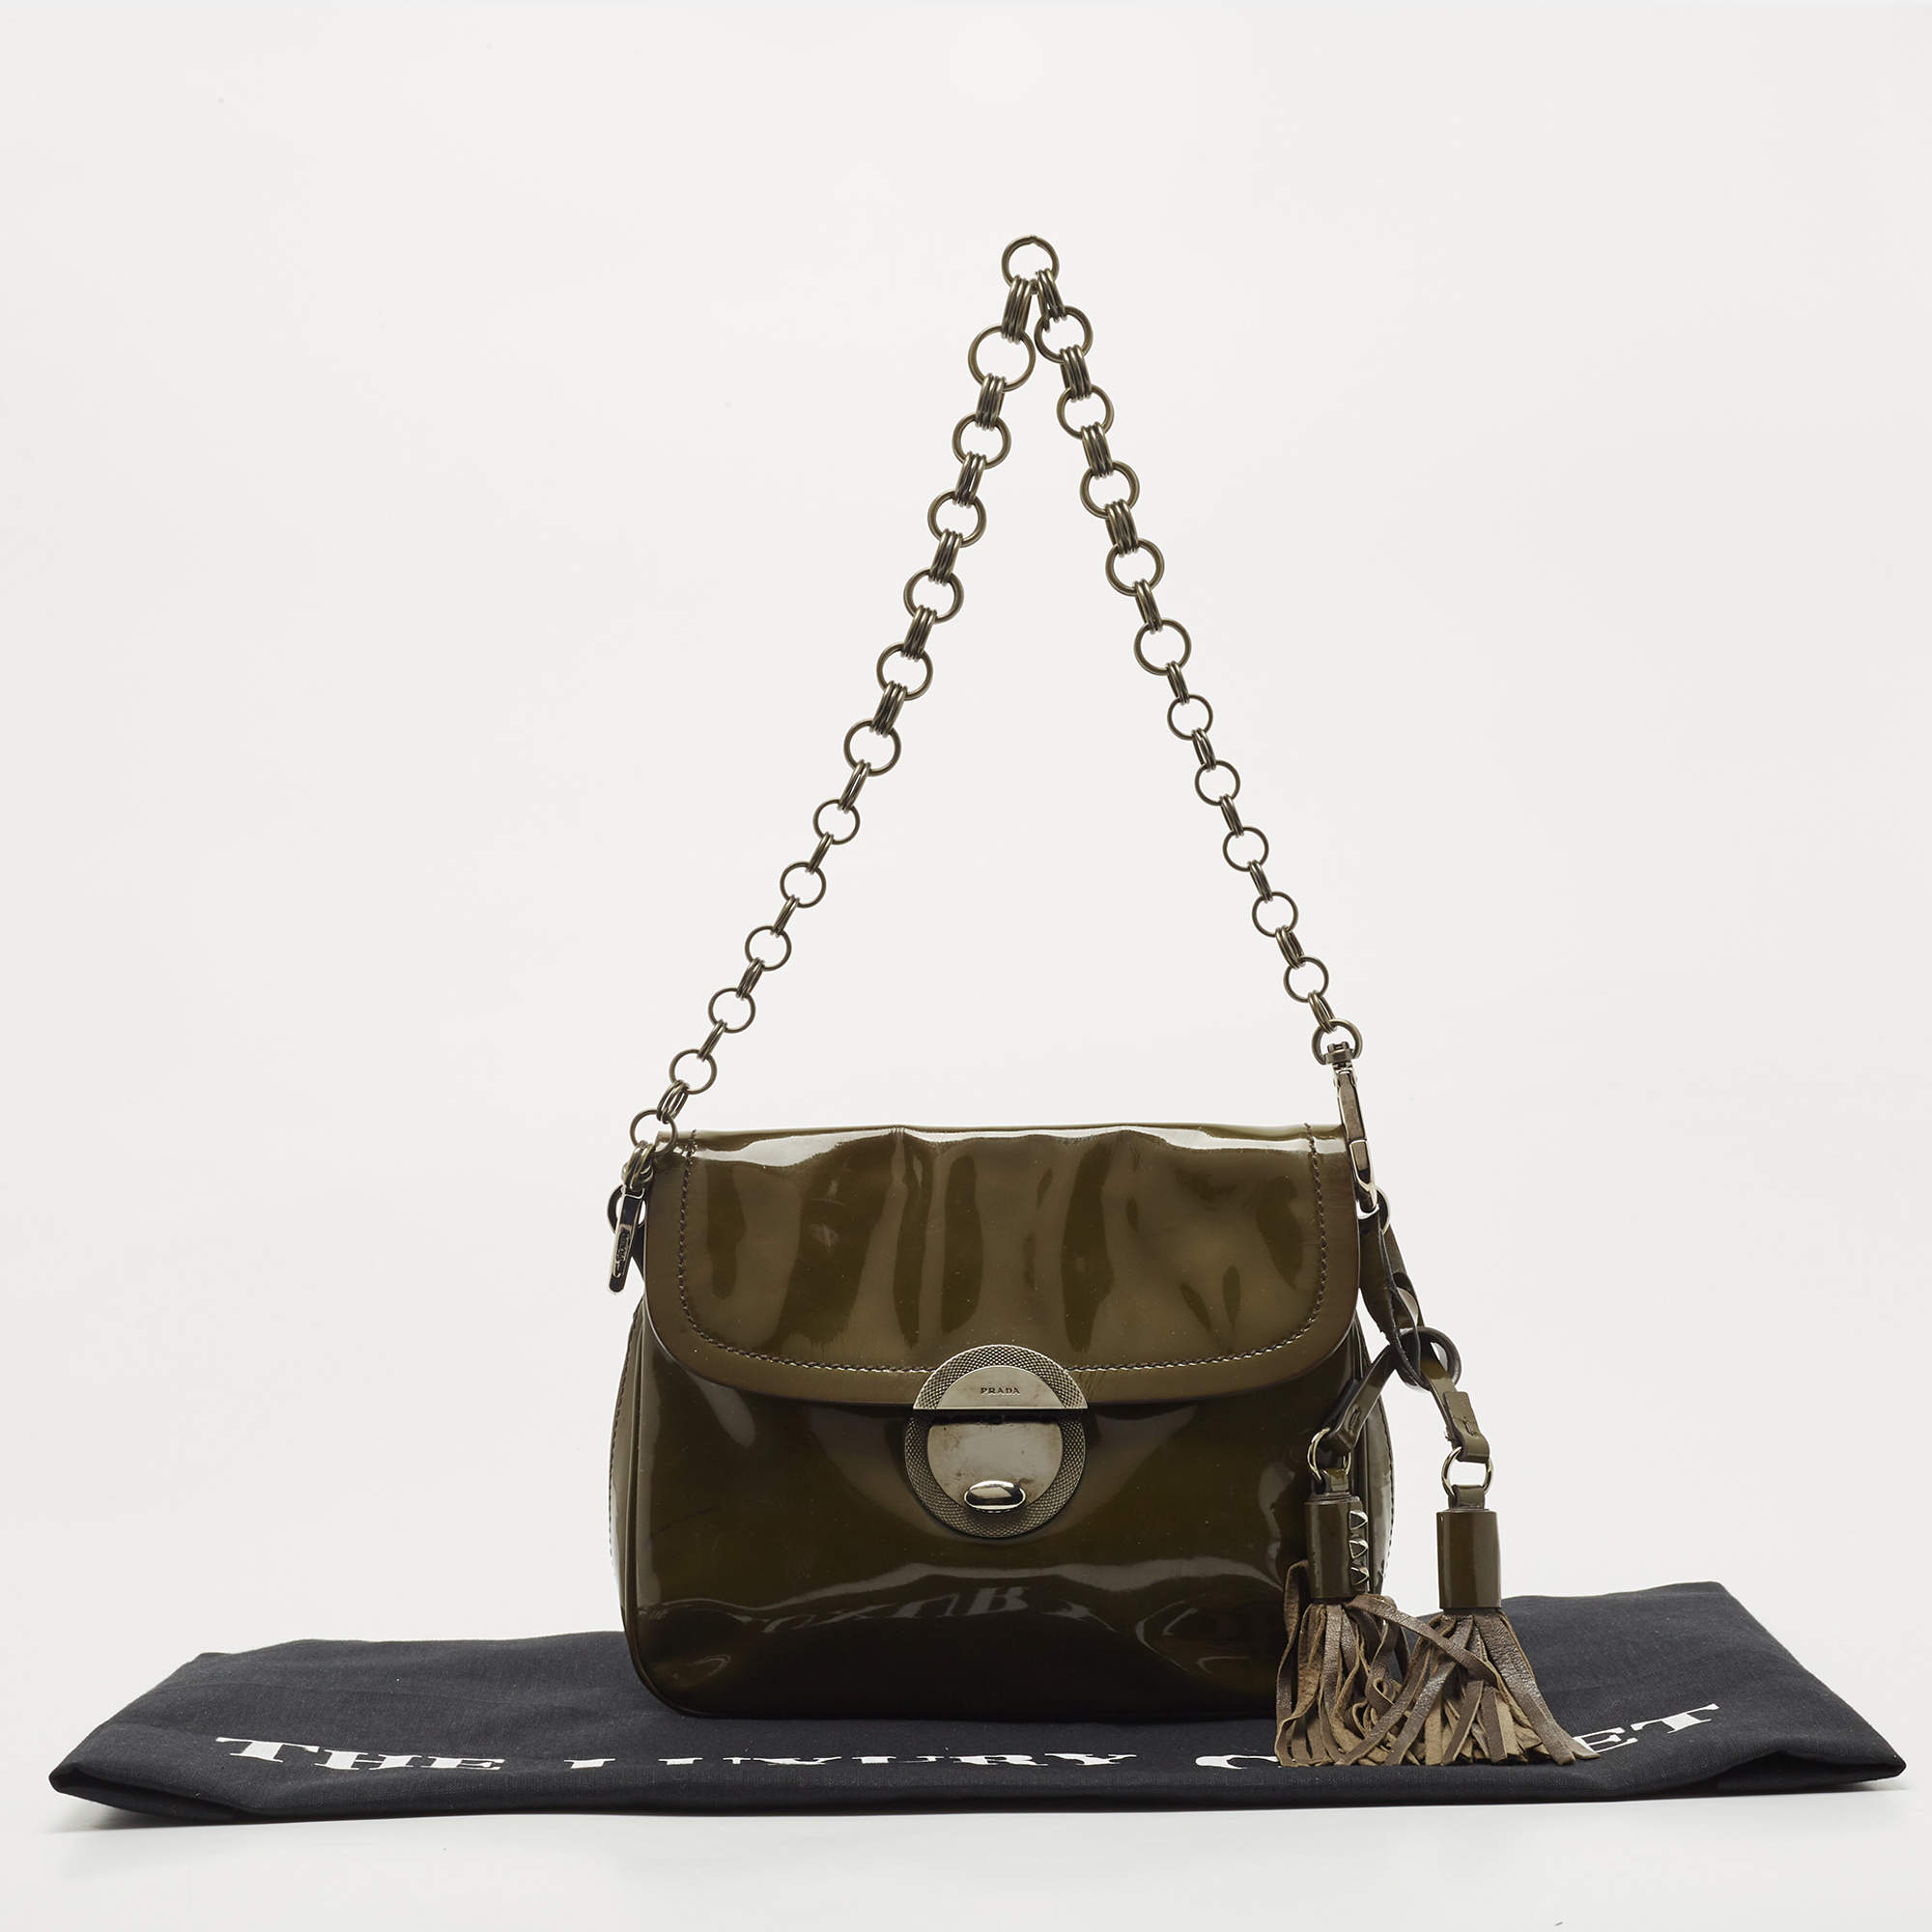 Prada Olive Green Patent Leather Flap Chain Shoulder Bag Prada